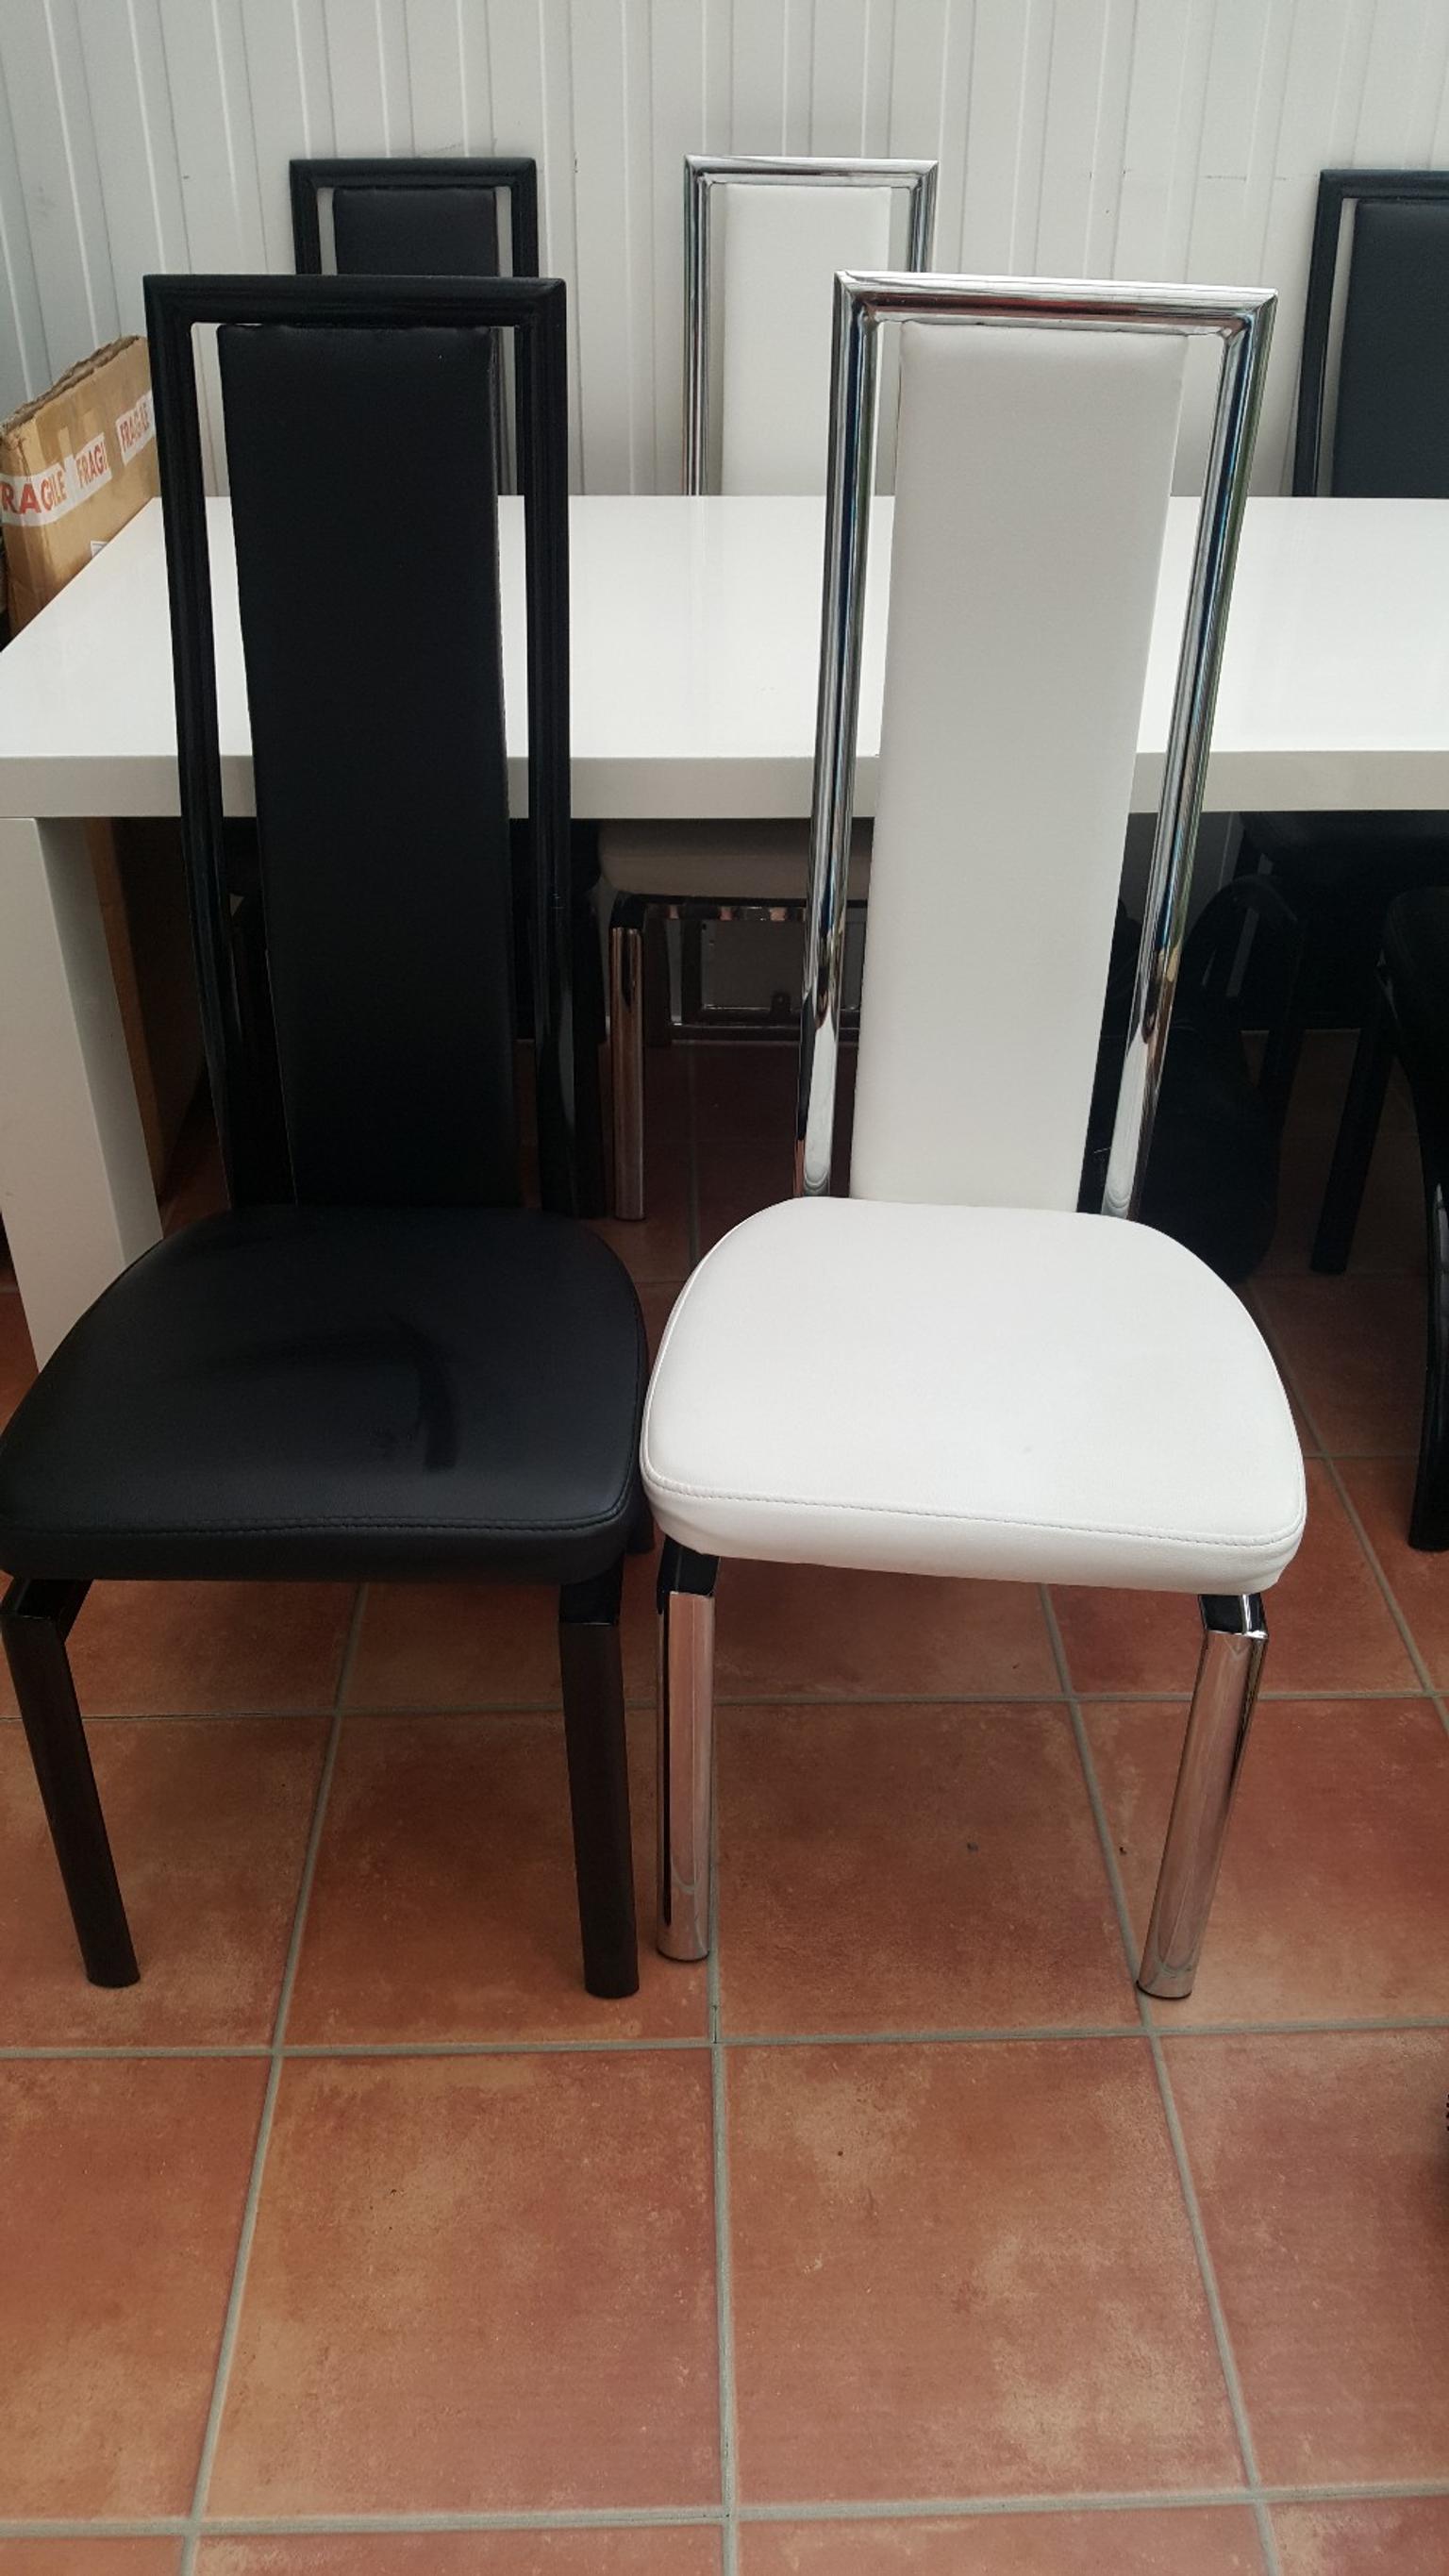 Dwell White High Gloss Dining Table 6 Chairs In Gu21 Woking Fur 300 00 Zum Verkauf Shpock De